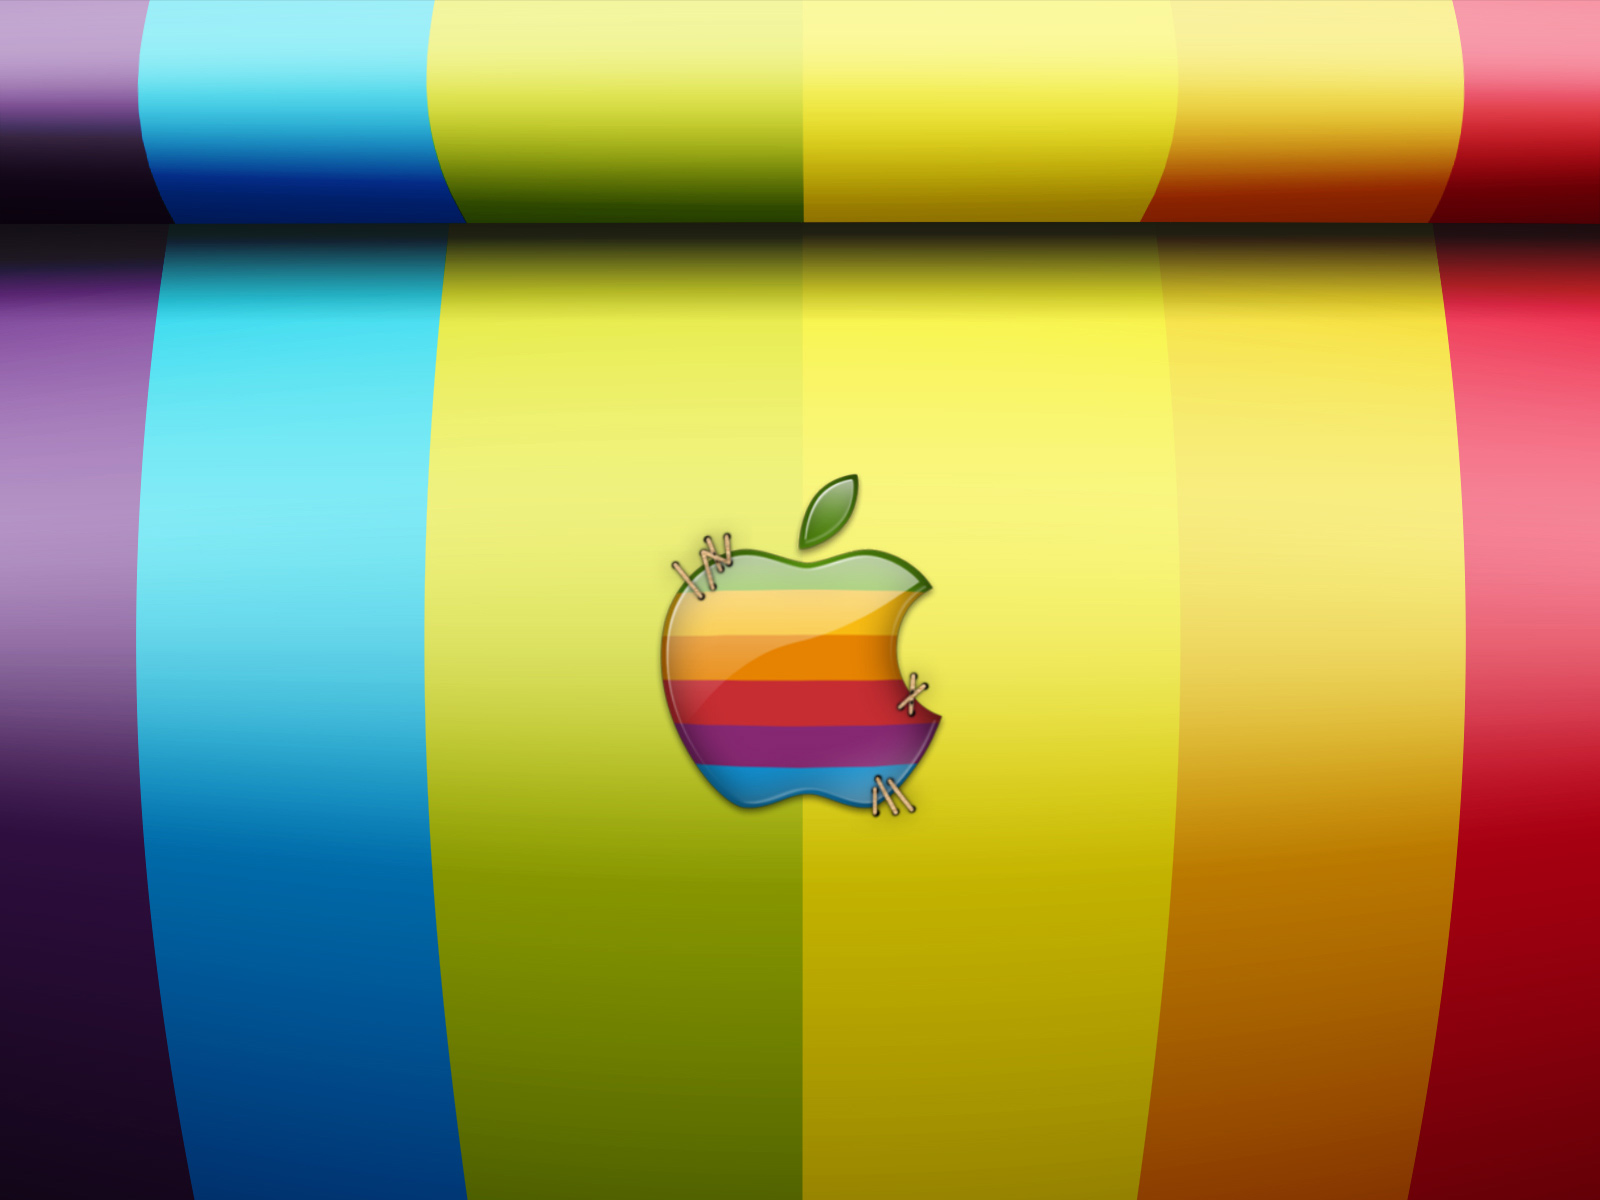 Desktop Wallpaper Gallery Computers Apple - Mac OS Free